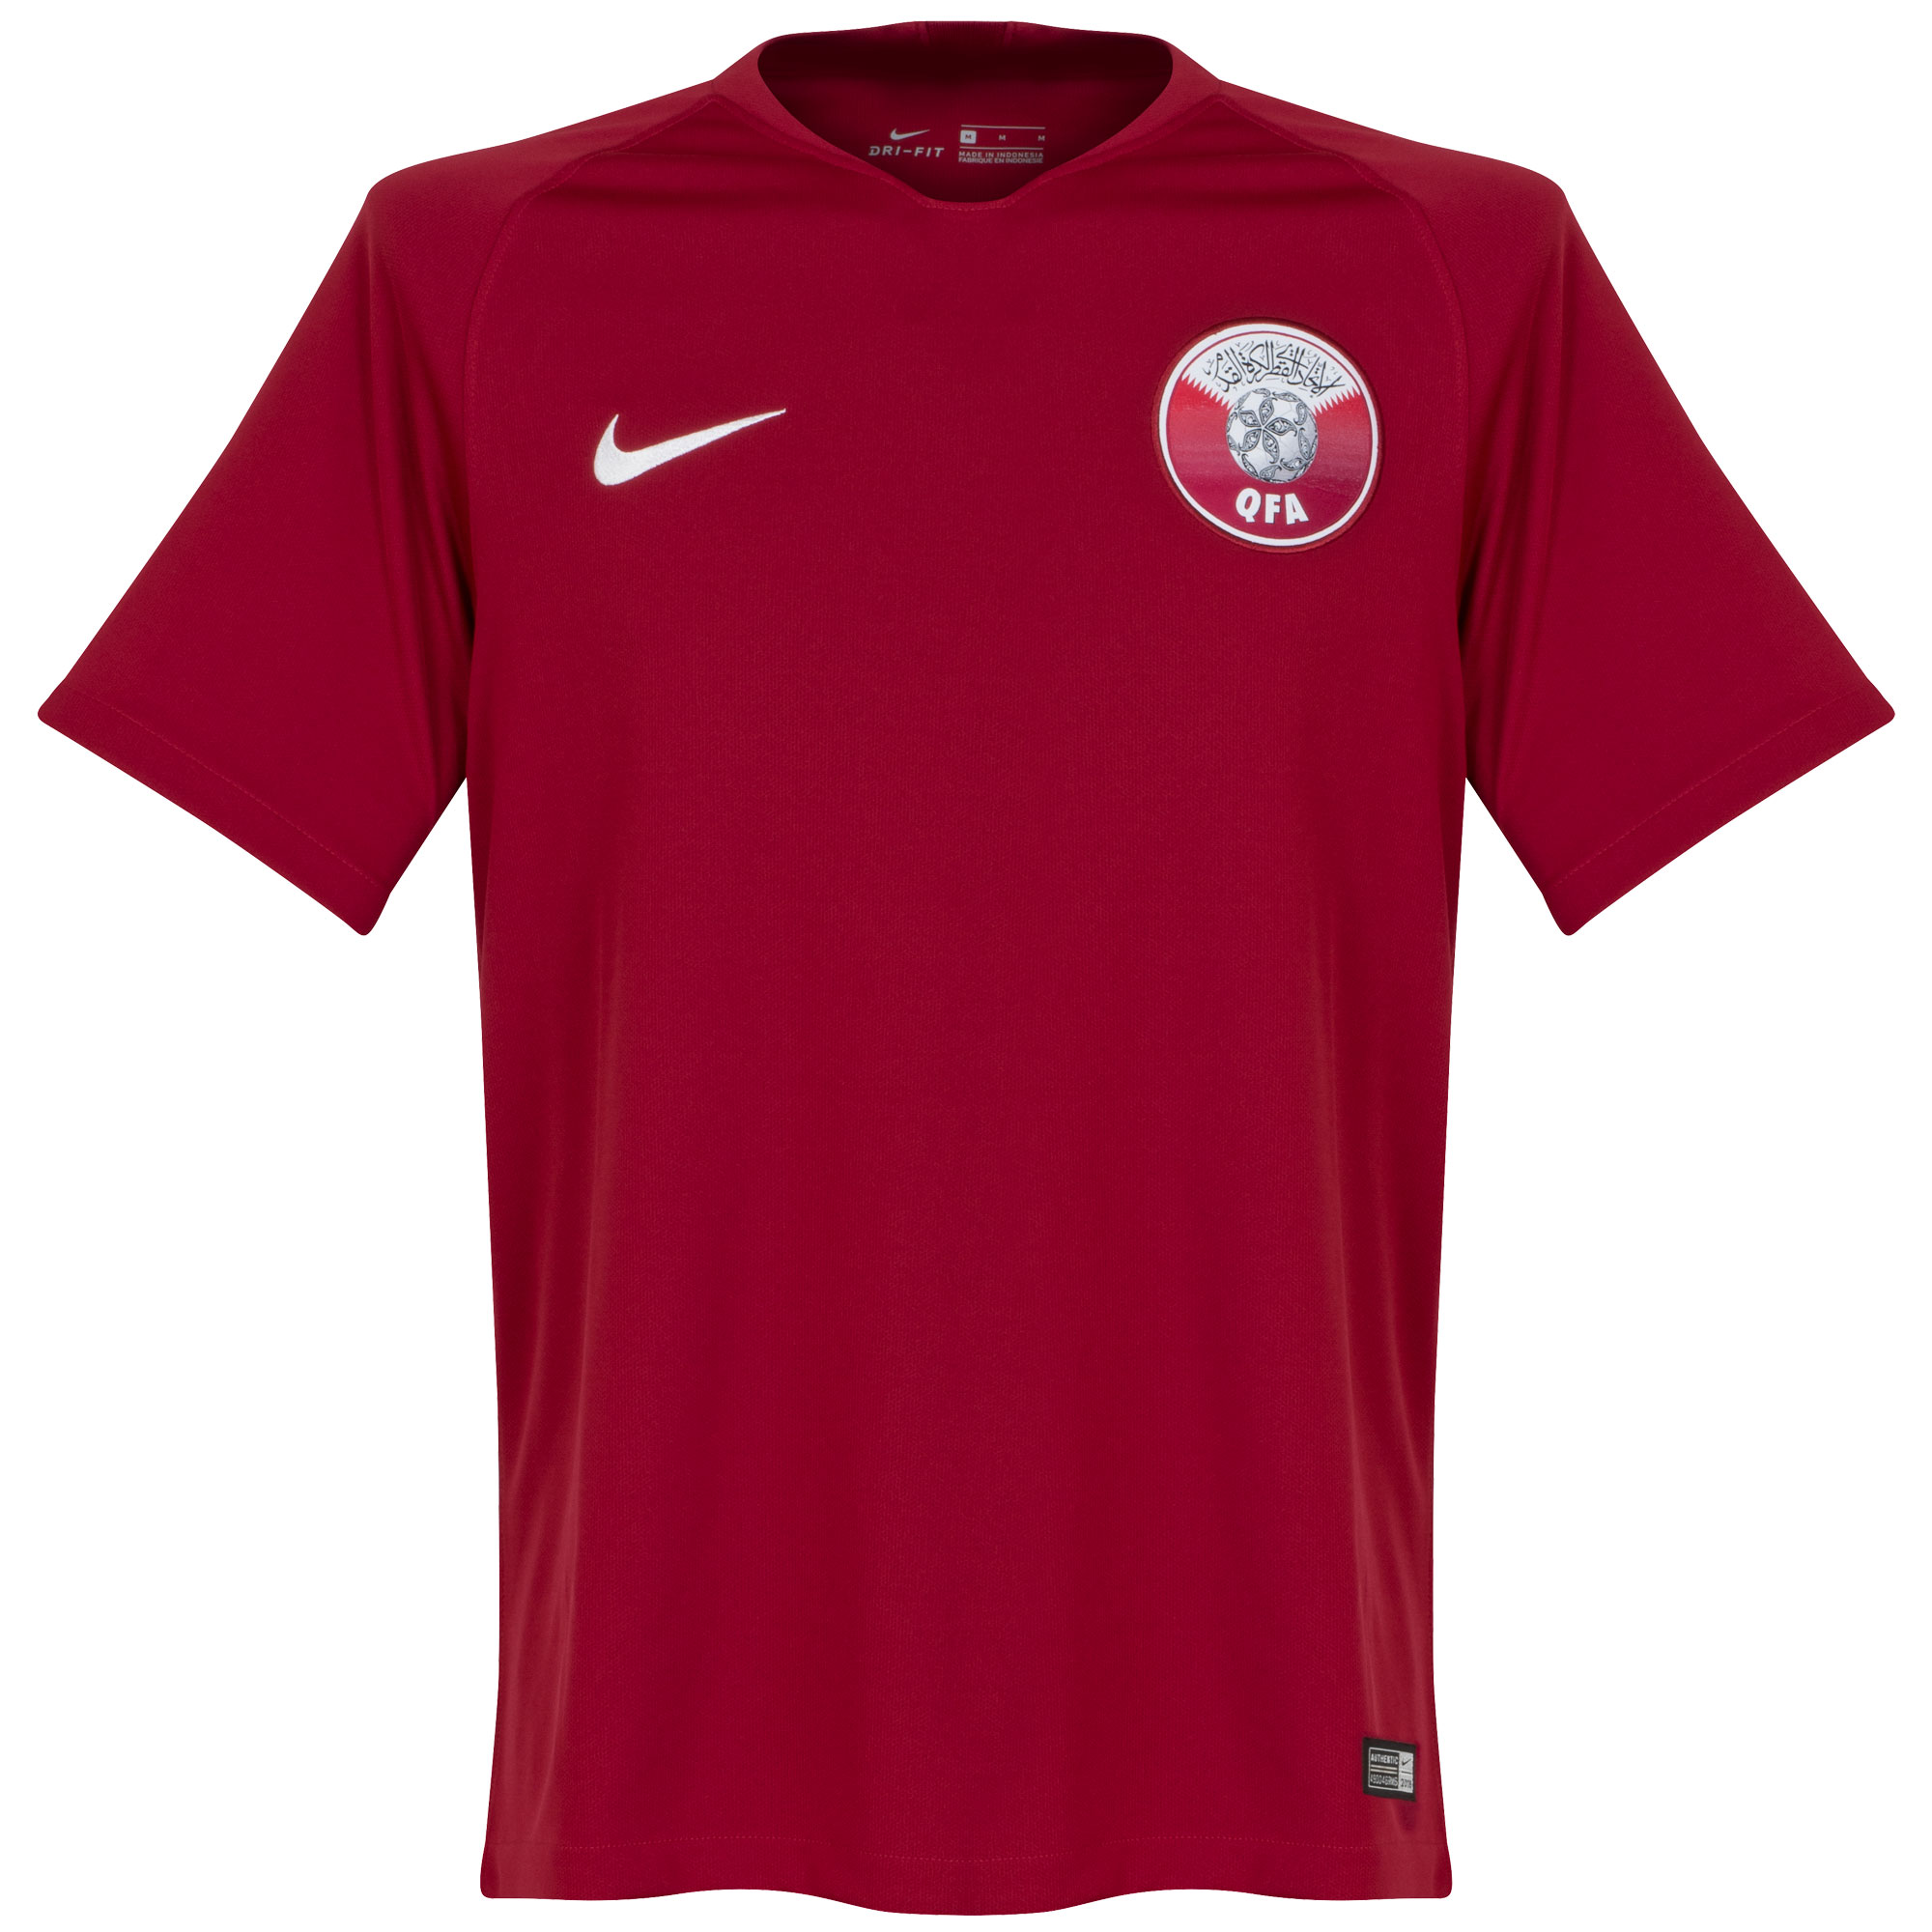 Old Qatar football shirts and soccer jerseys